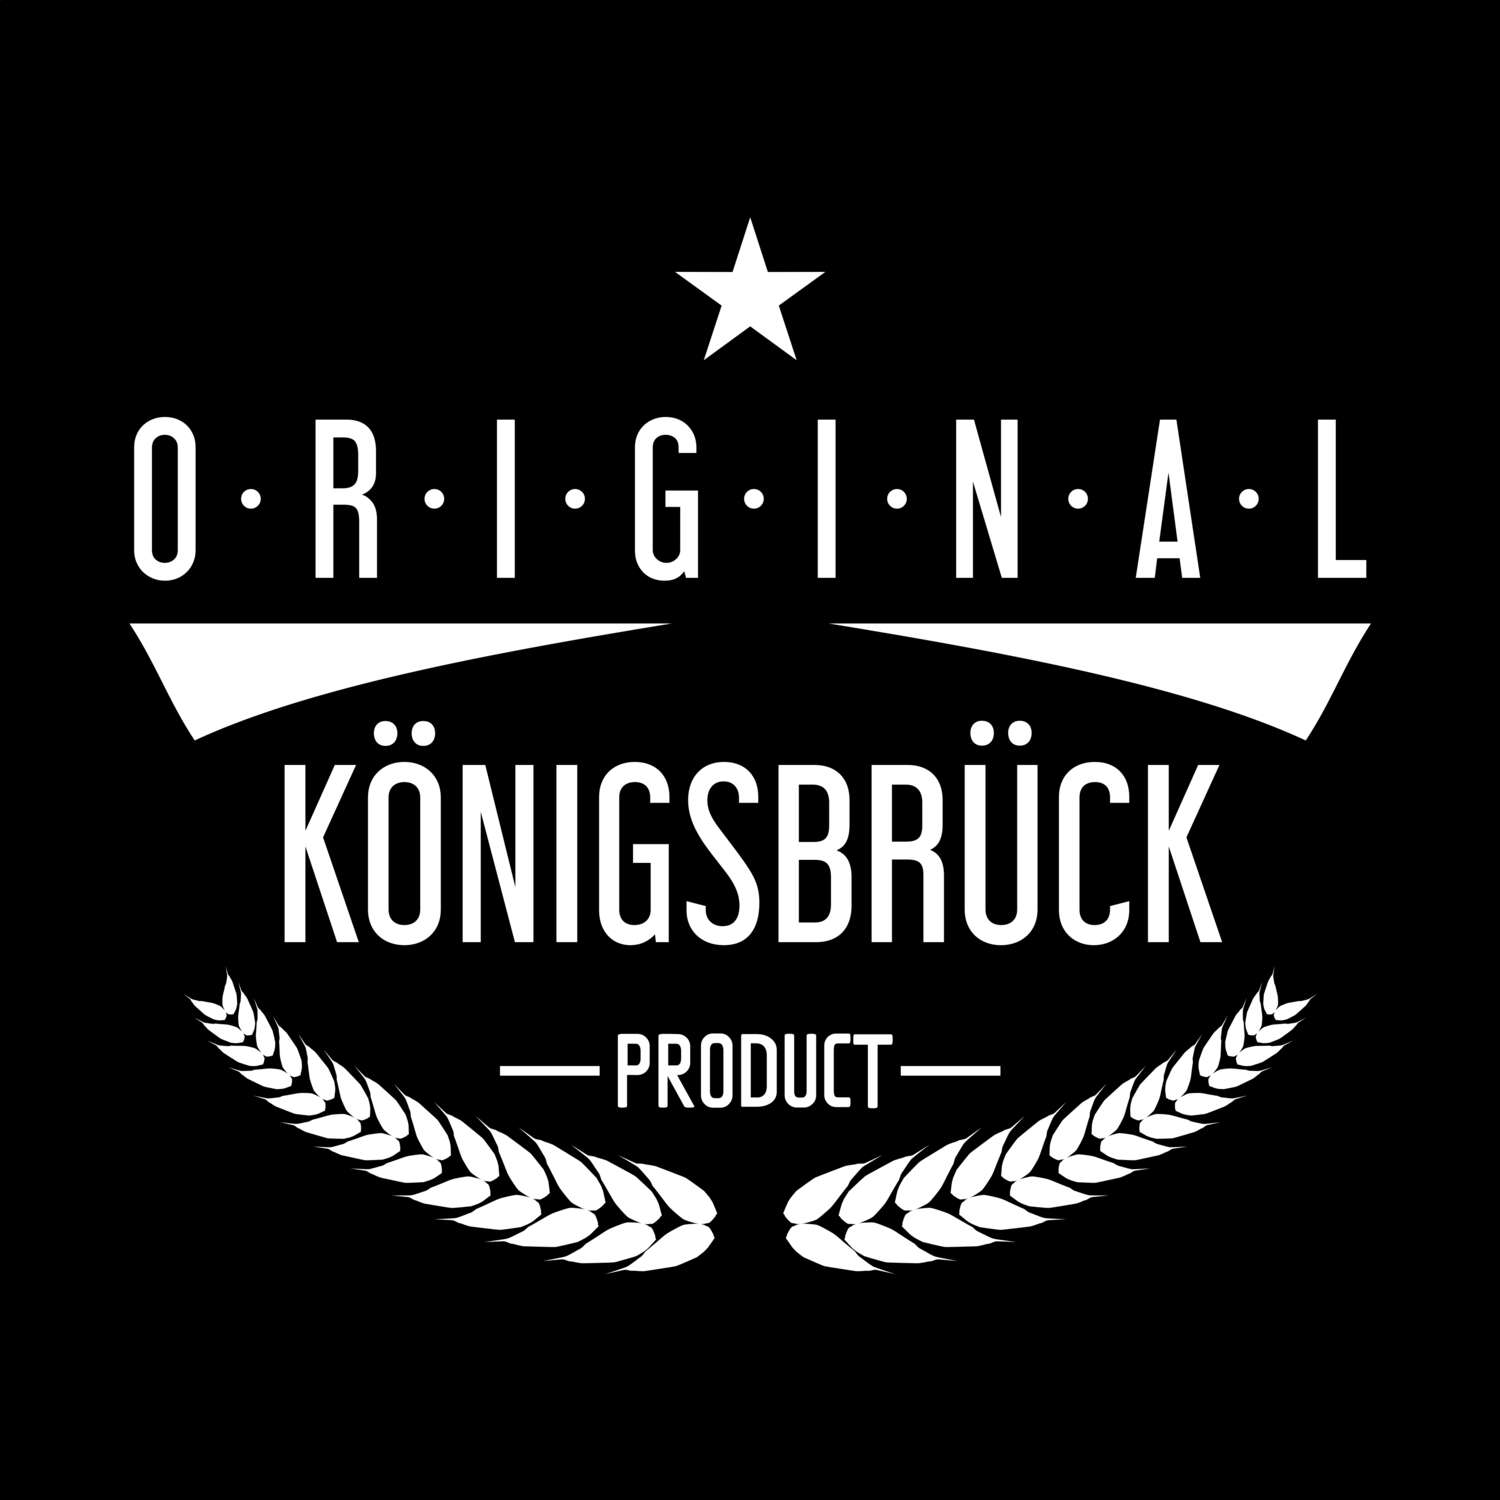 Königsbrück T-Shirt »Original Product«